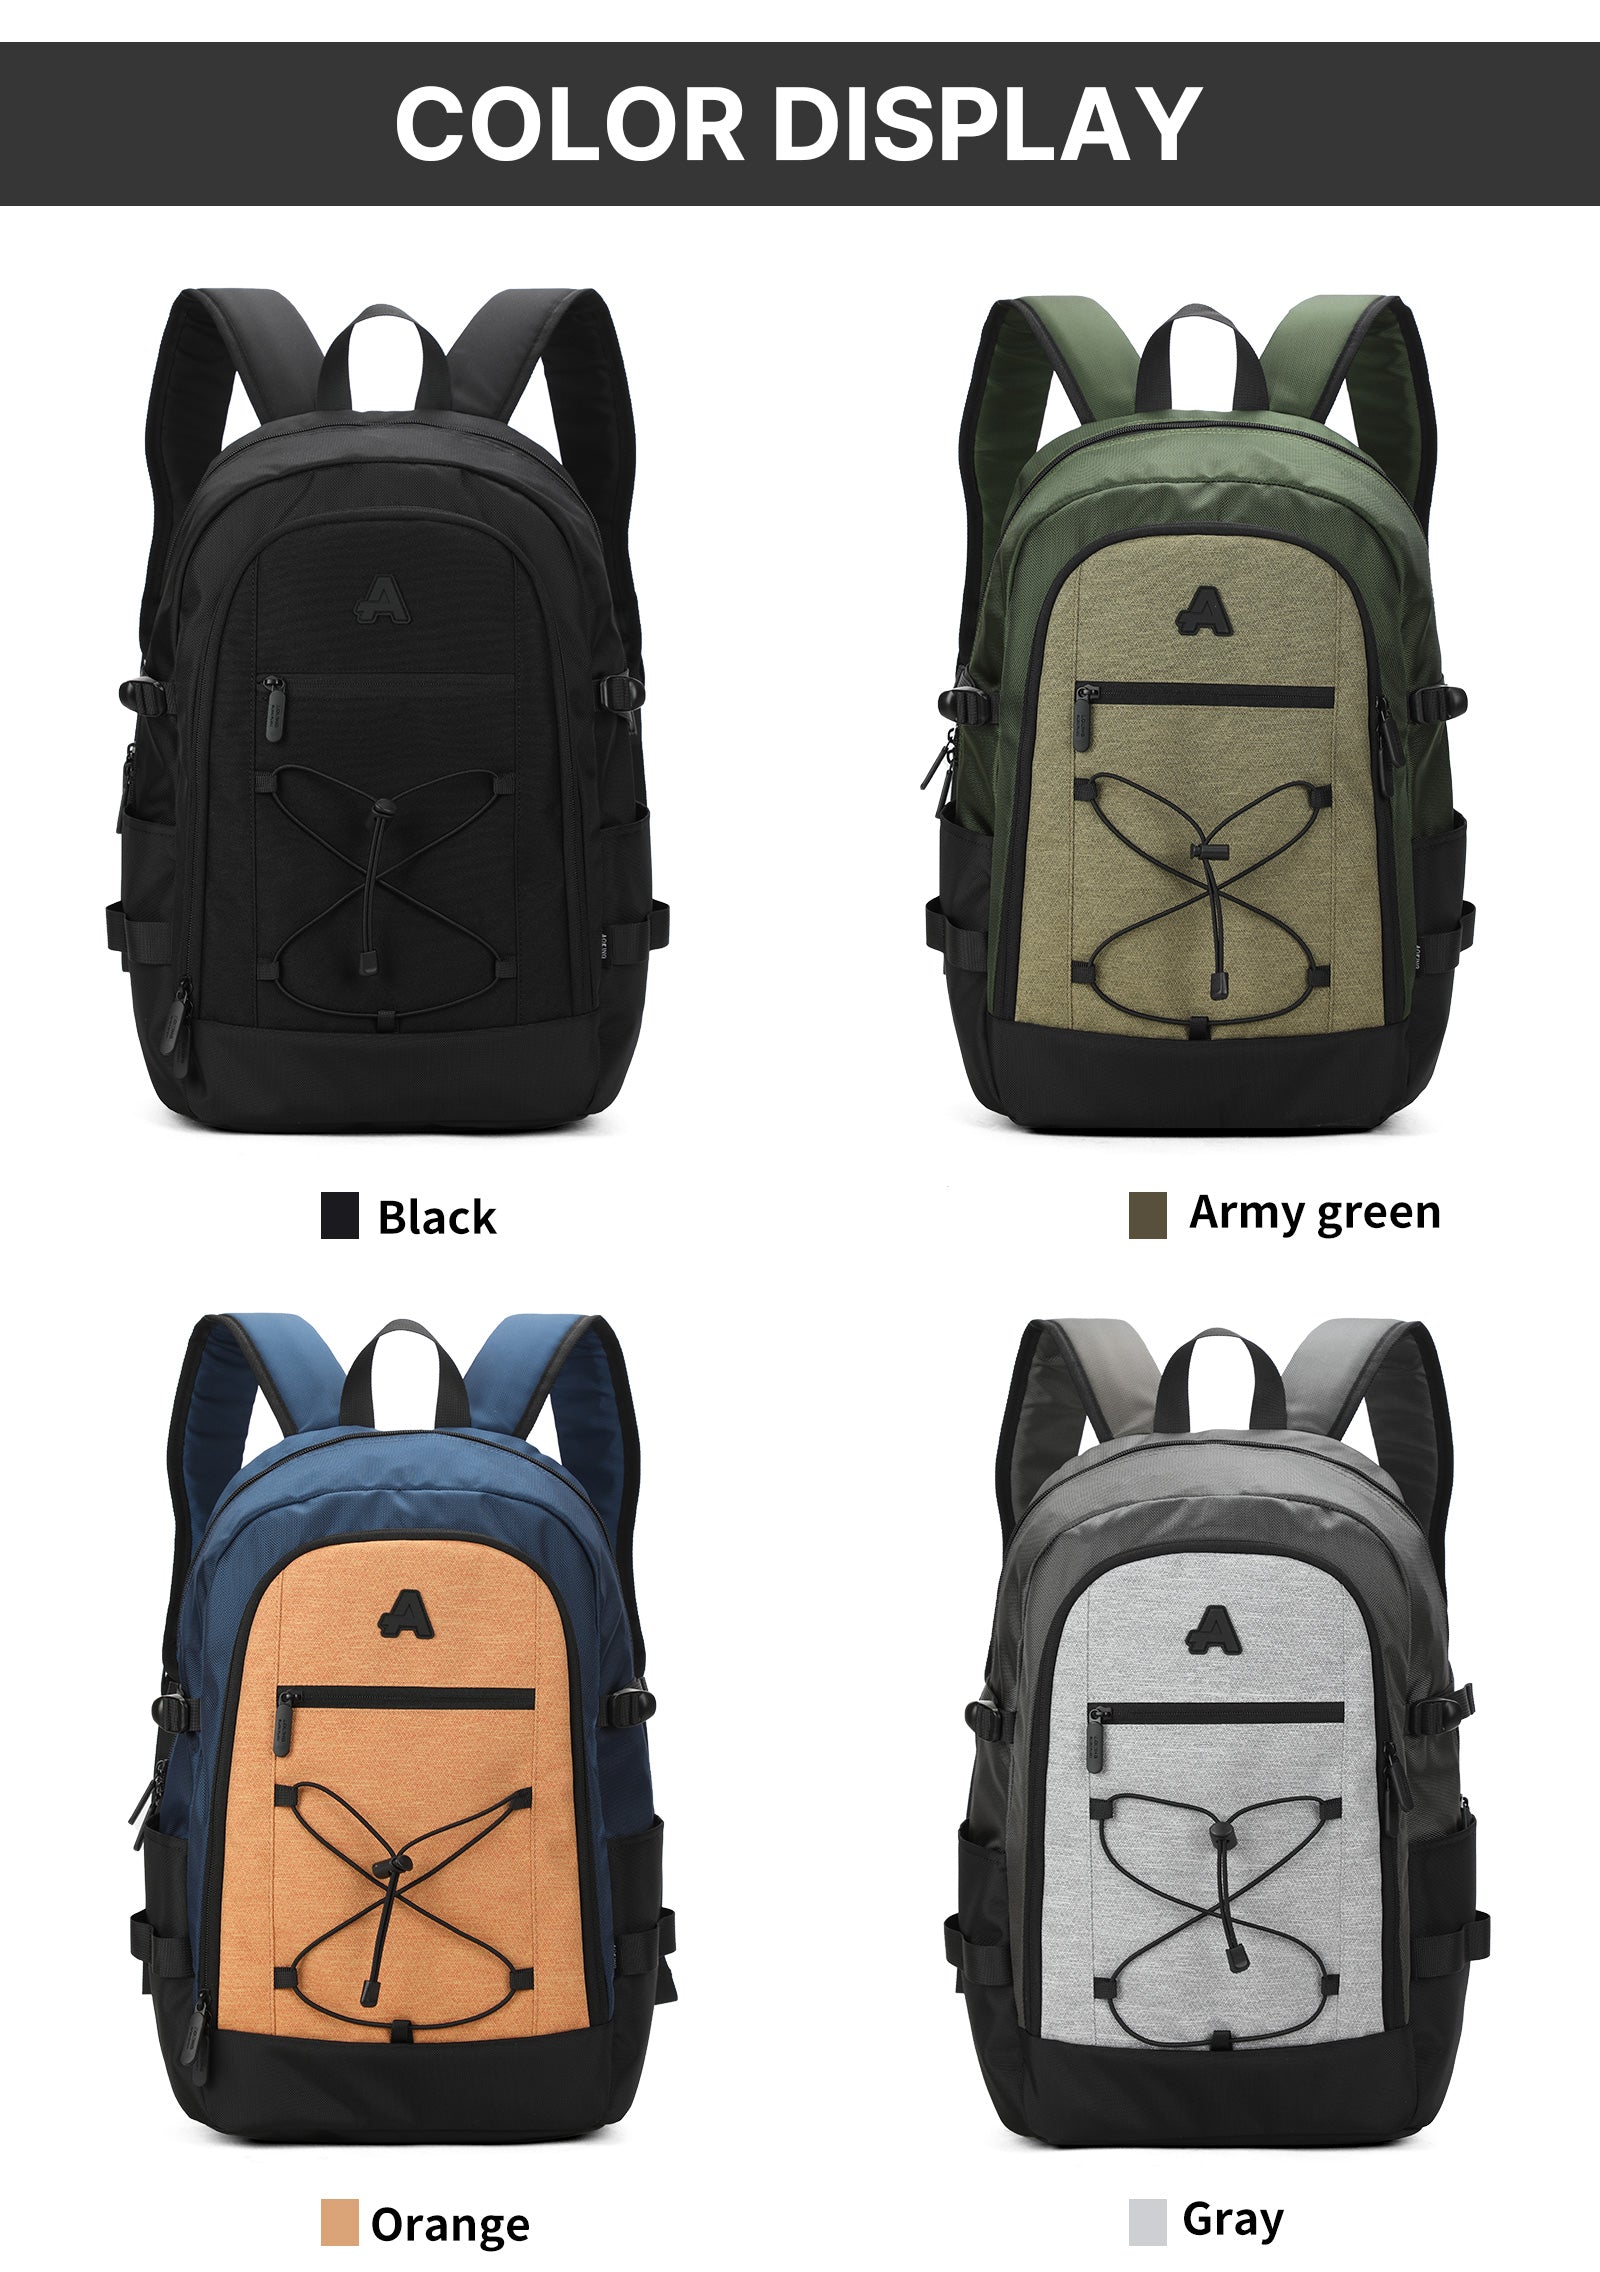 Aoking Backpack Casual Backpack Student Bag XN3508